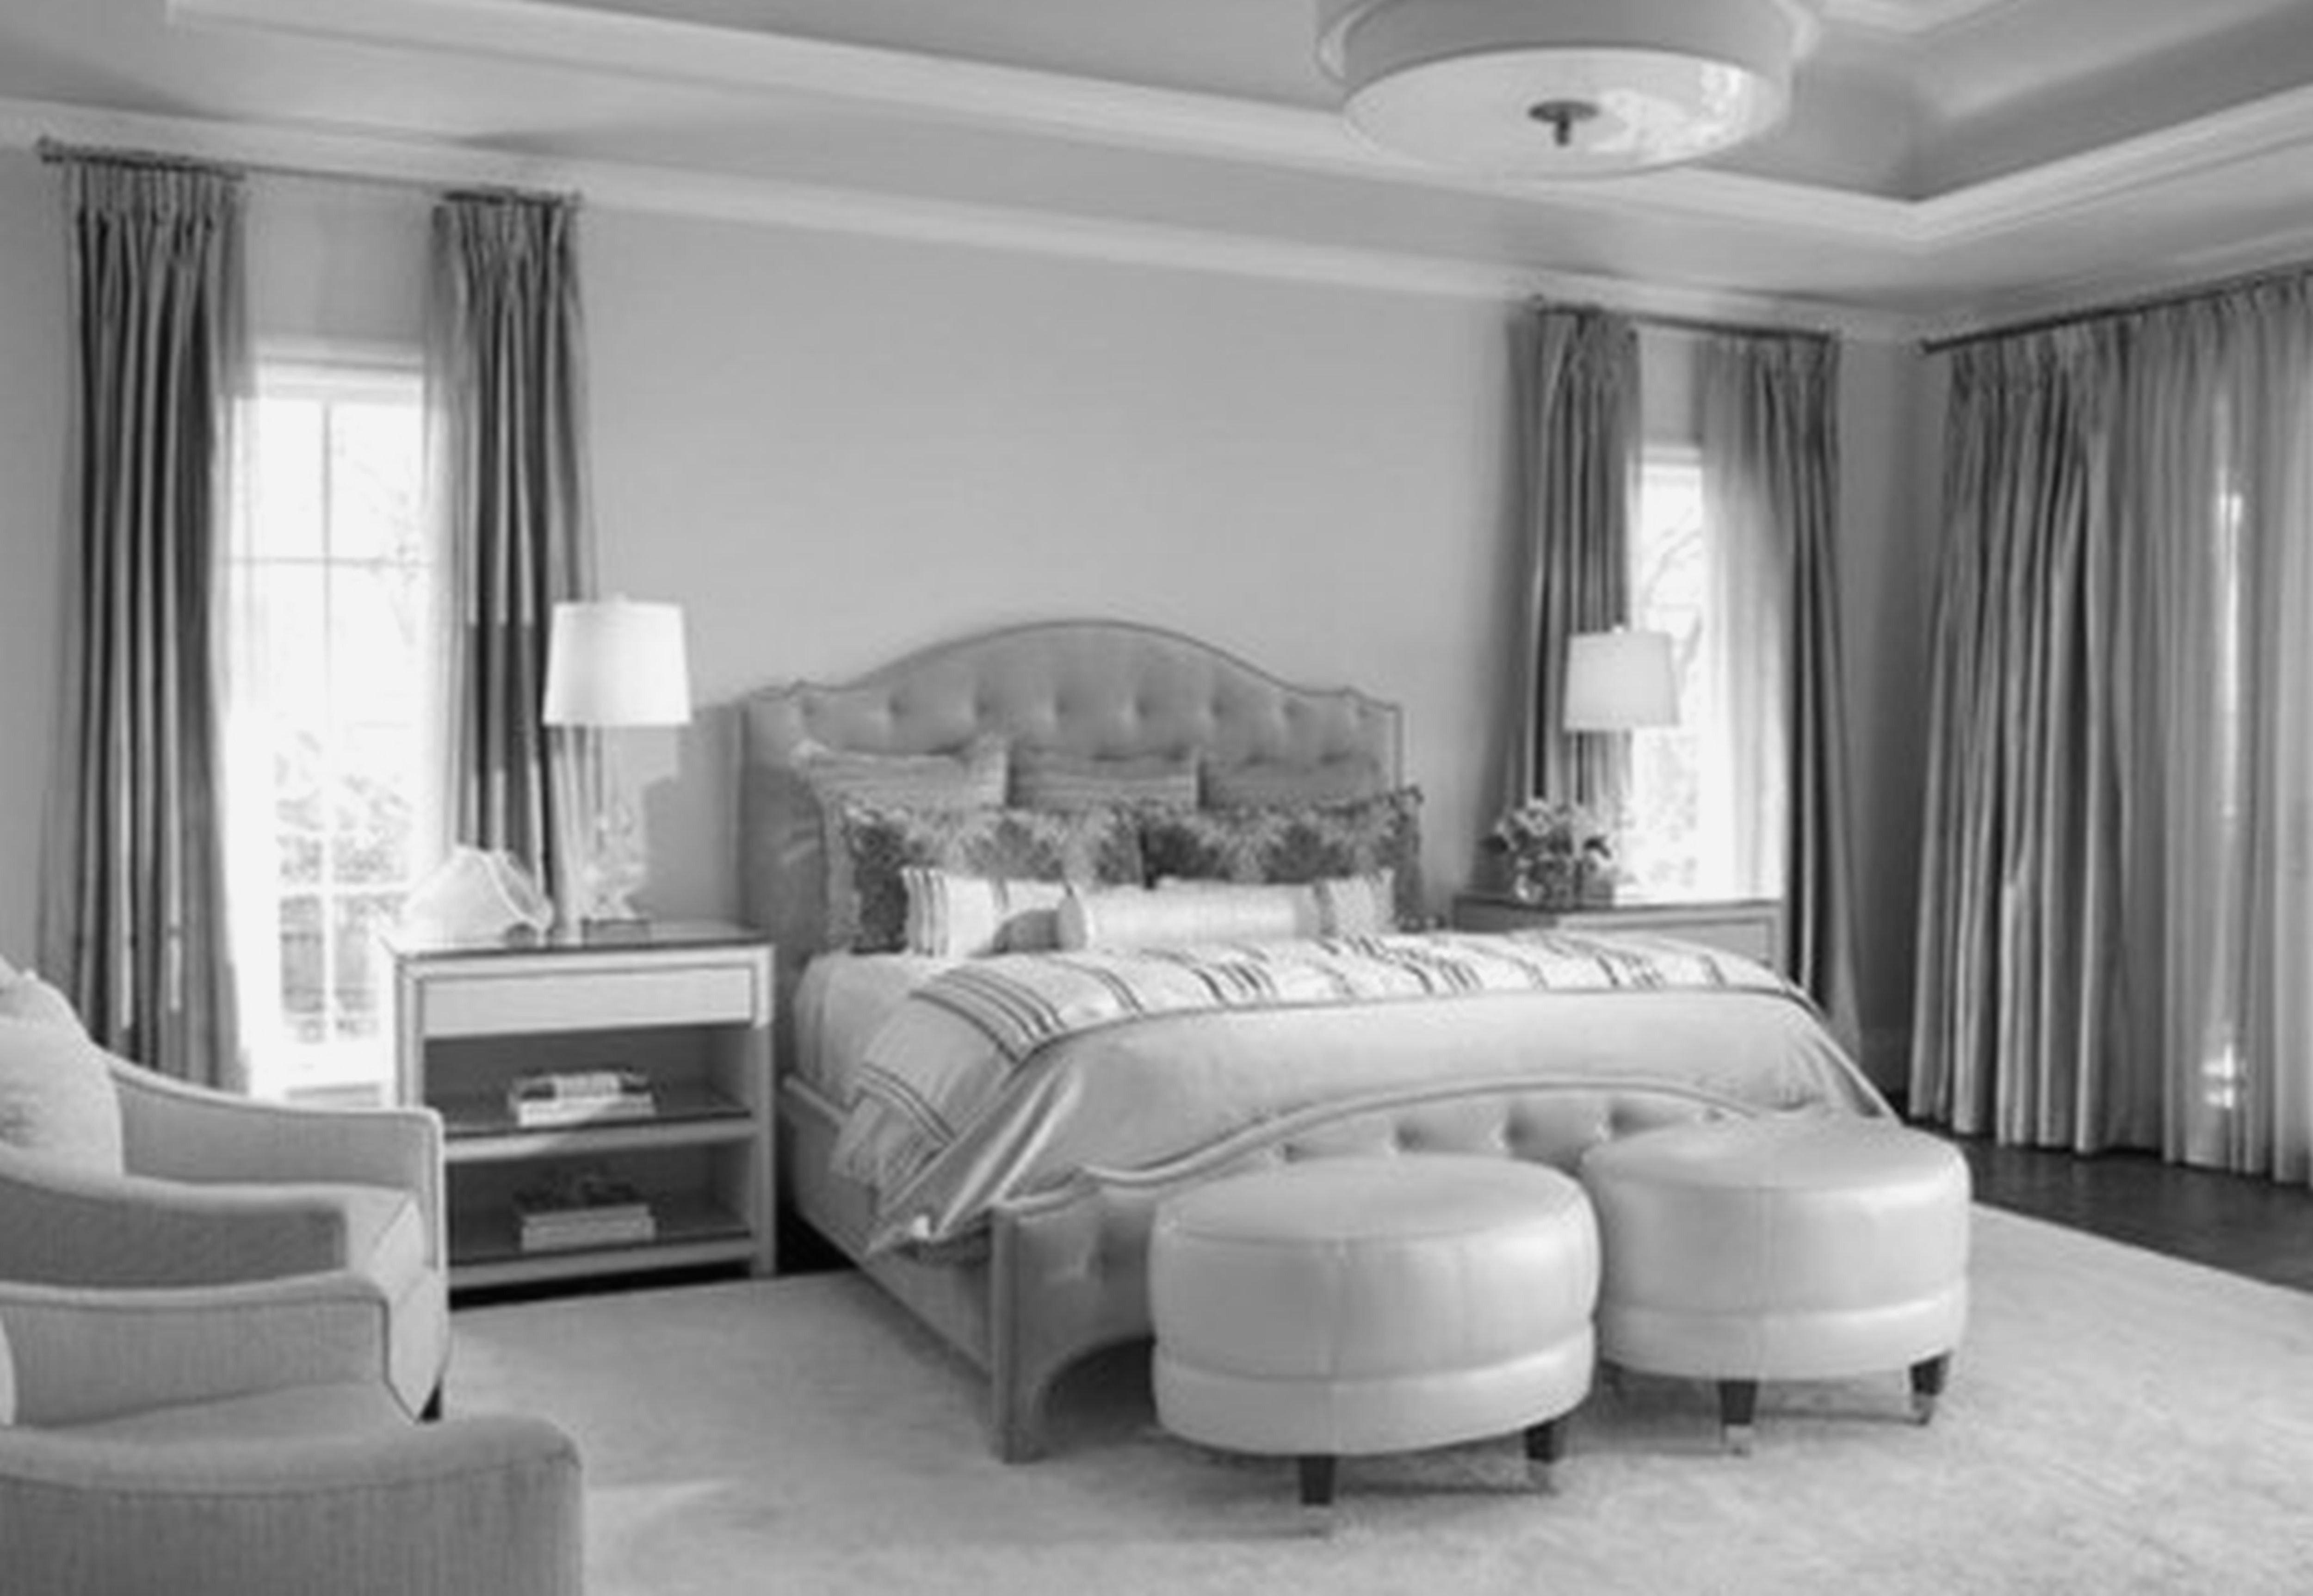 10 Amazing Grey And White Bedroom Ideas white bedroom decorating unique grey white bedroom decorating ideas 2023